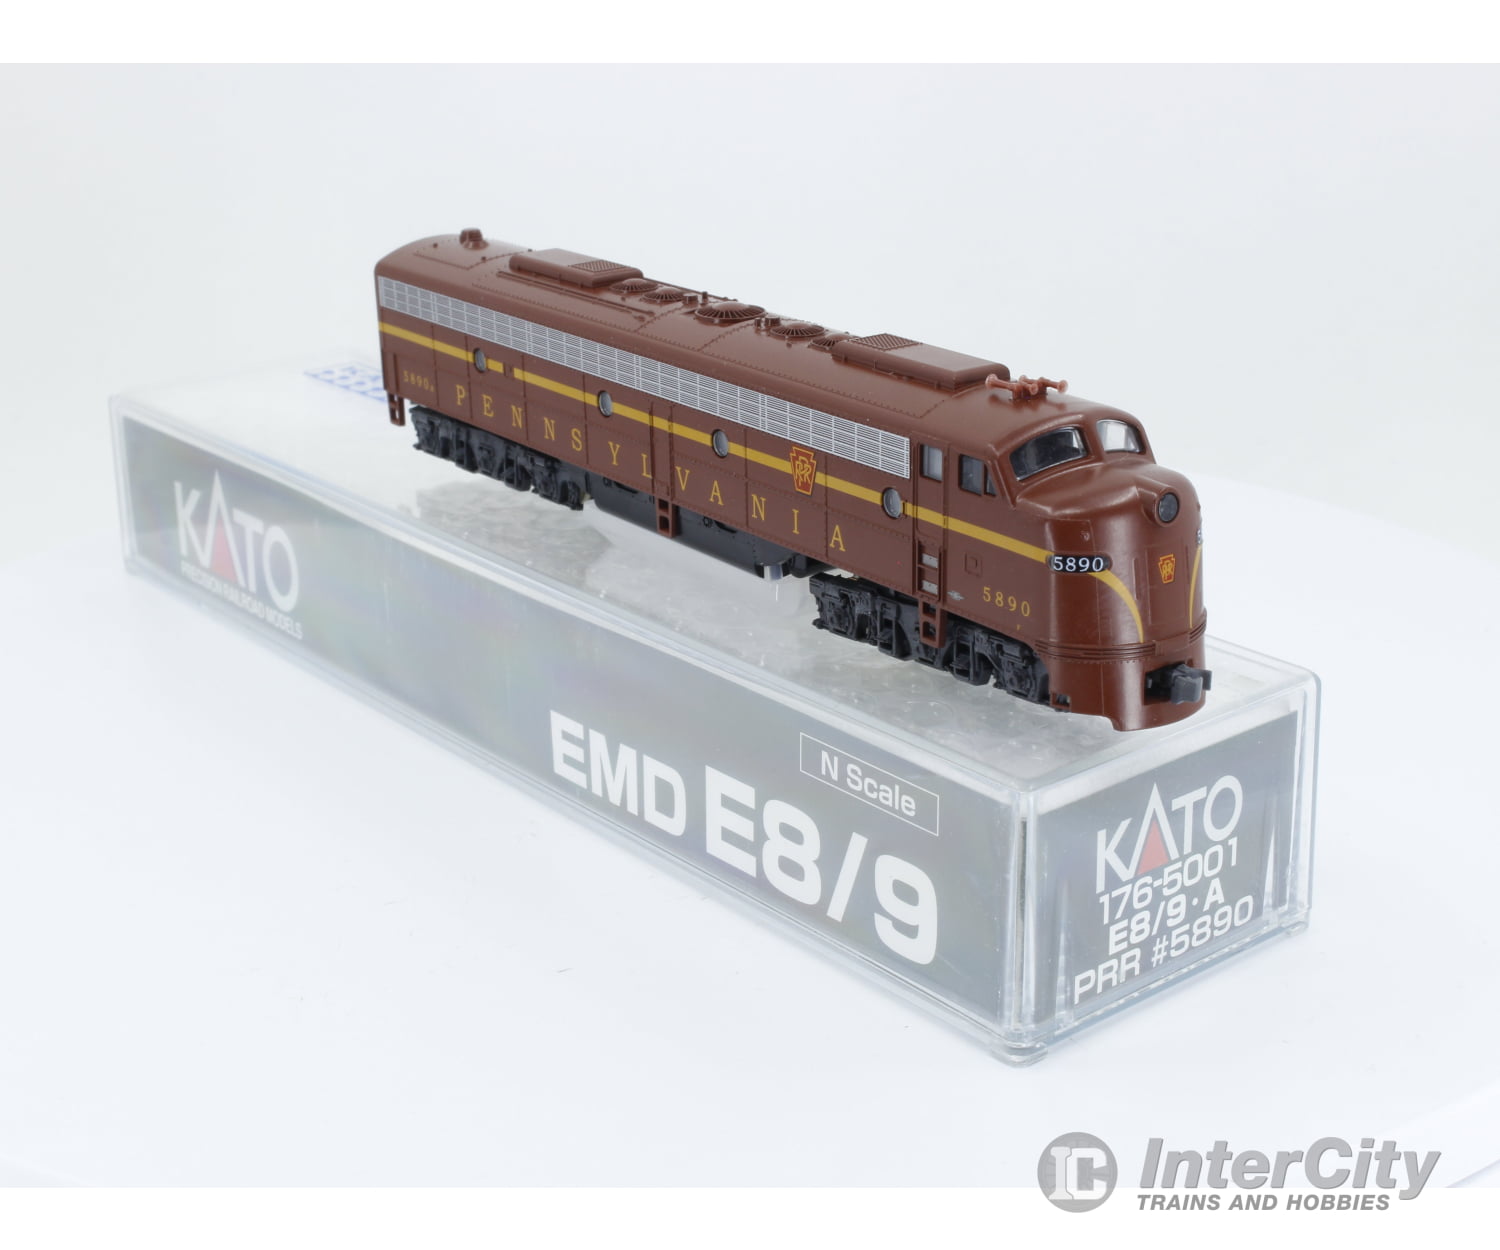 Kato 176-5001 N E8/9.A Locomotive Pennsylvania (Prr) 5890 Analog Dc Locomotives